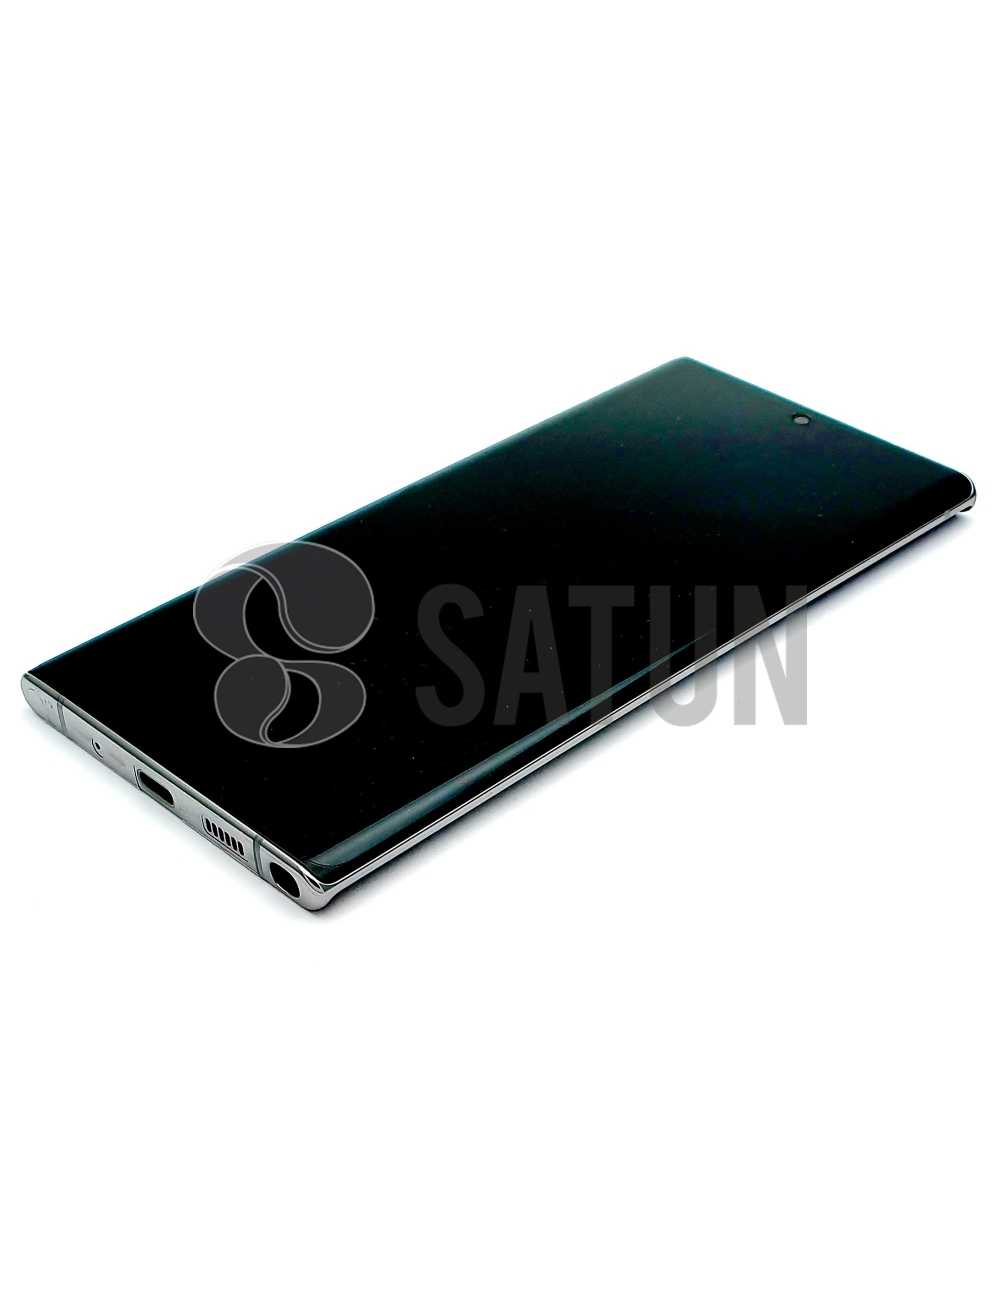 Pantalla Samsung Galaxy Note 10 plus plata azul